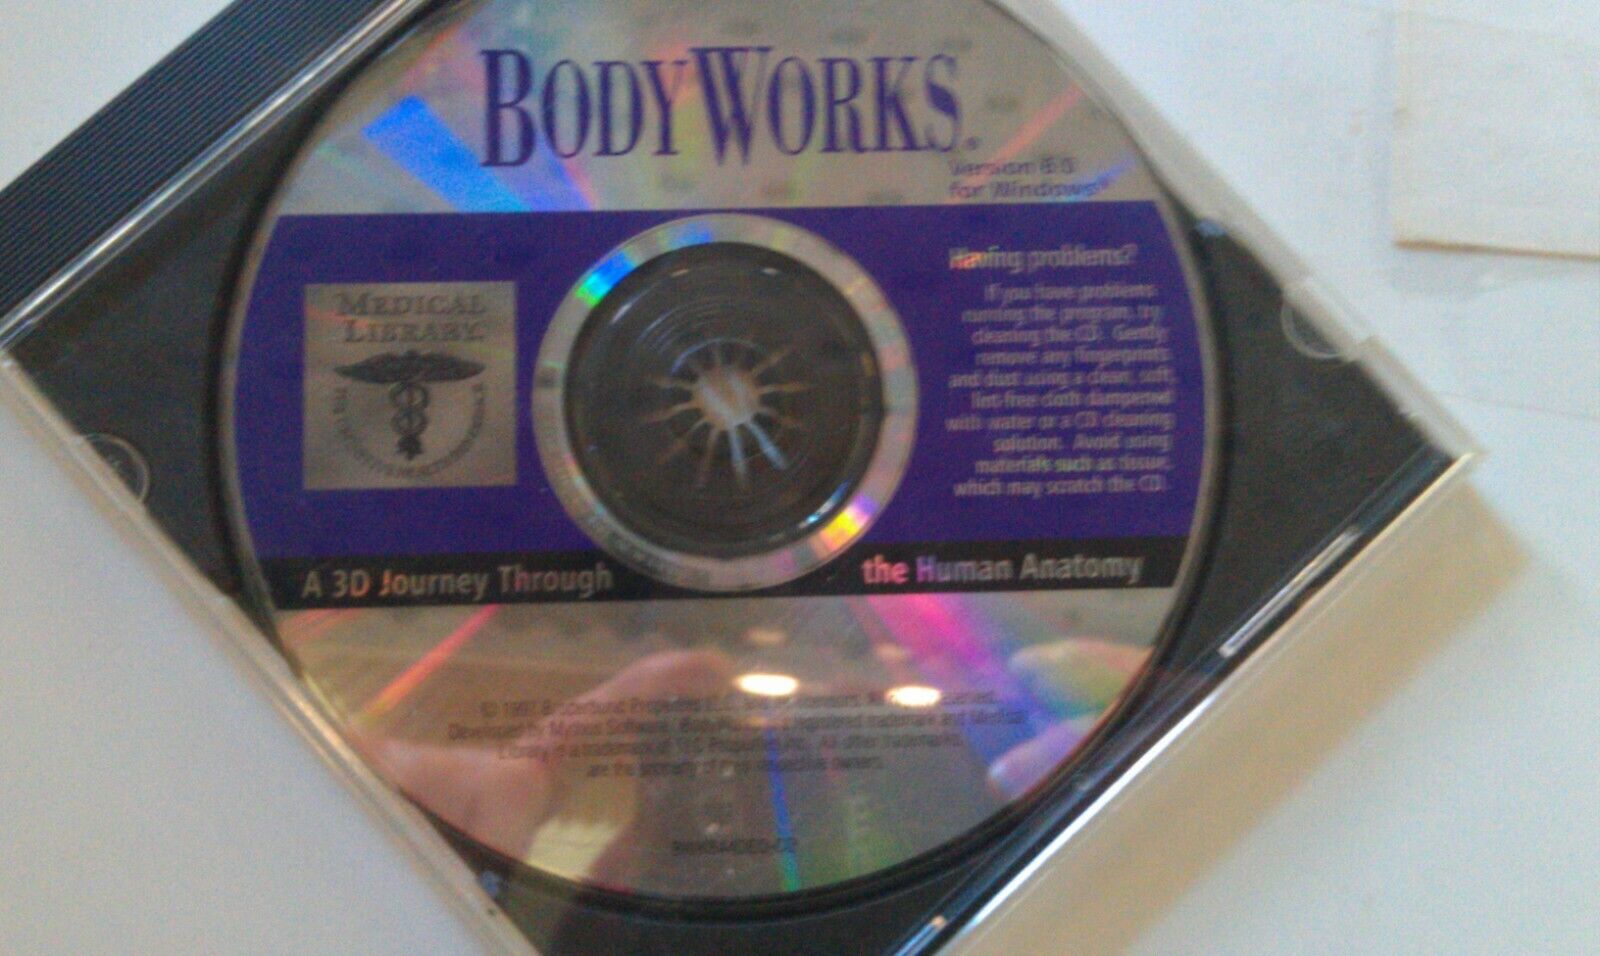 BodyWorks A 3D Journey Through The Human Anatomy | 1997 PC CD for Windows